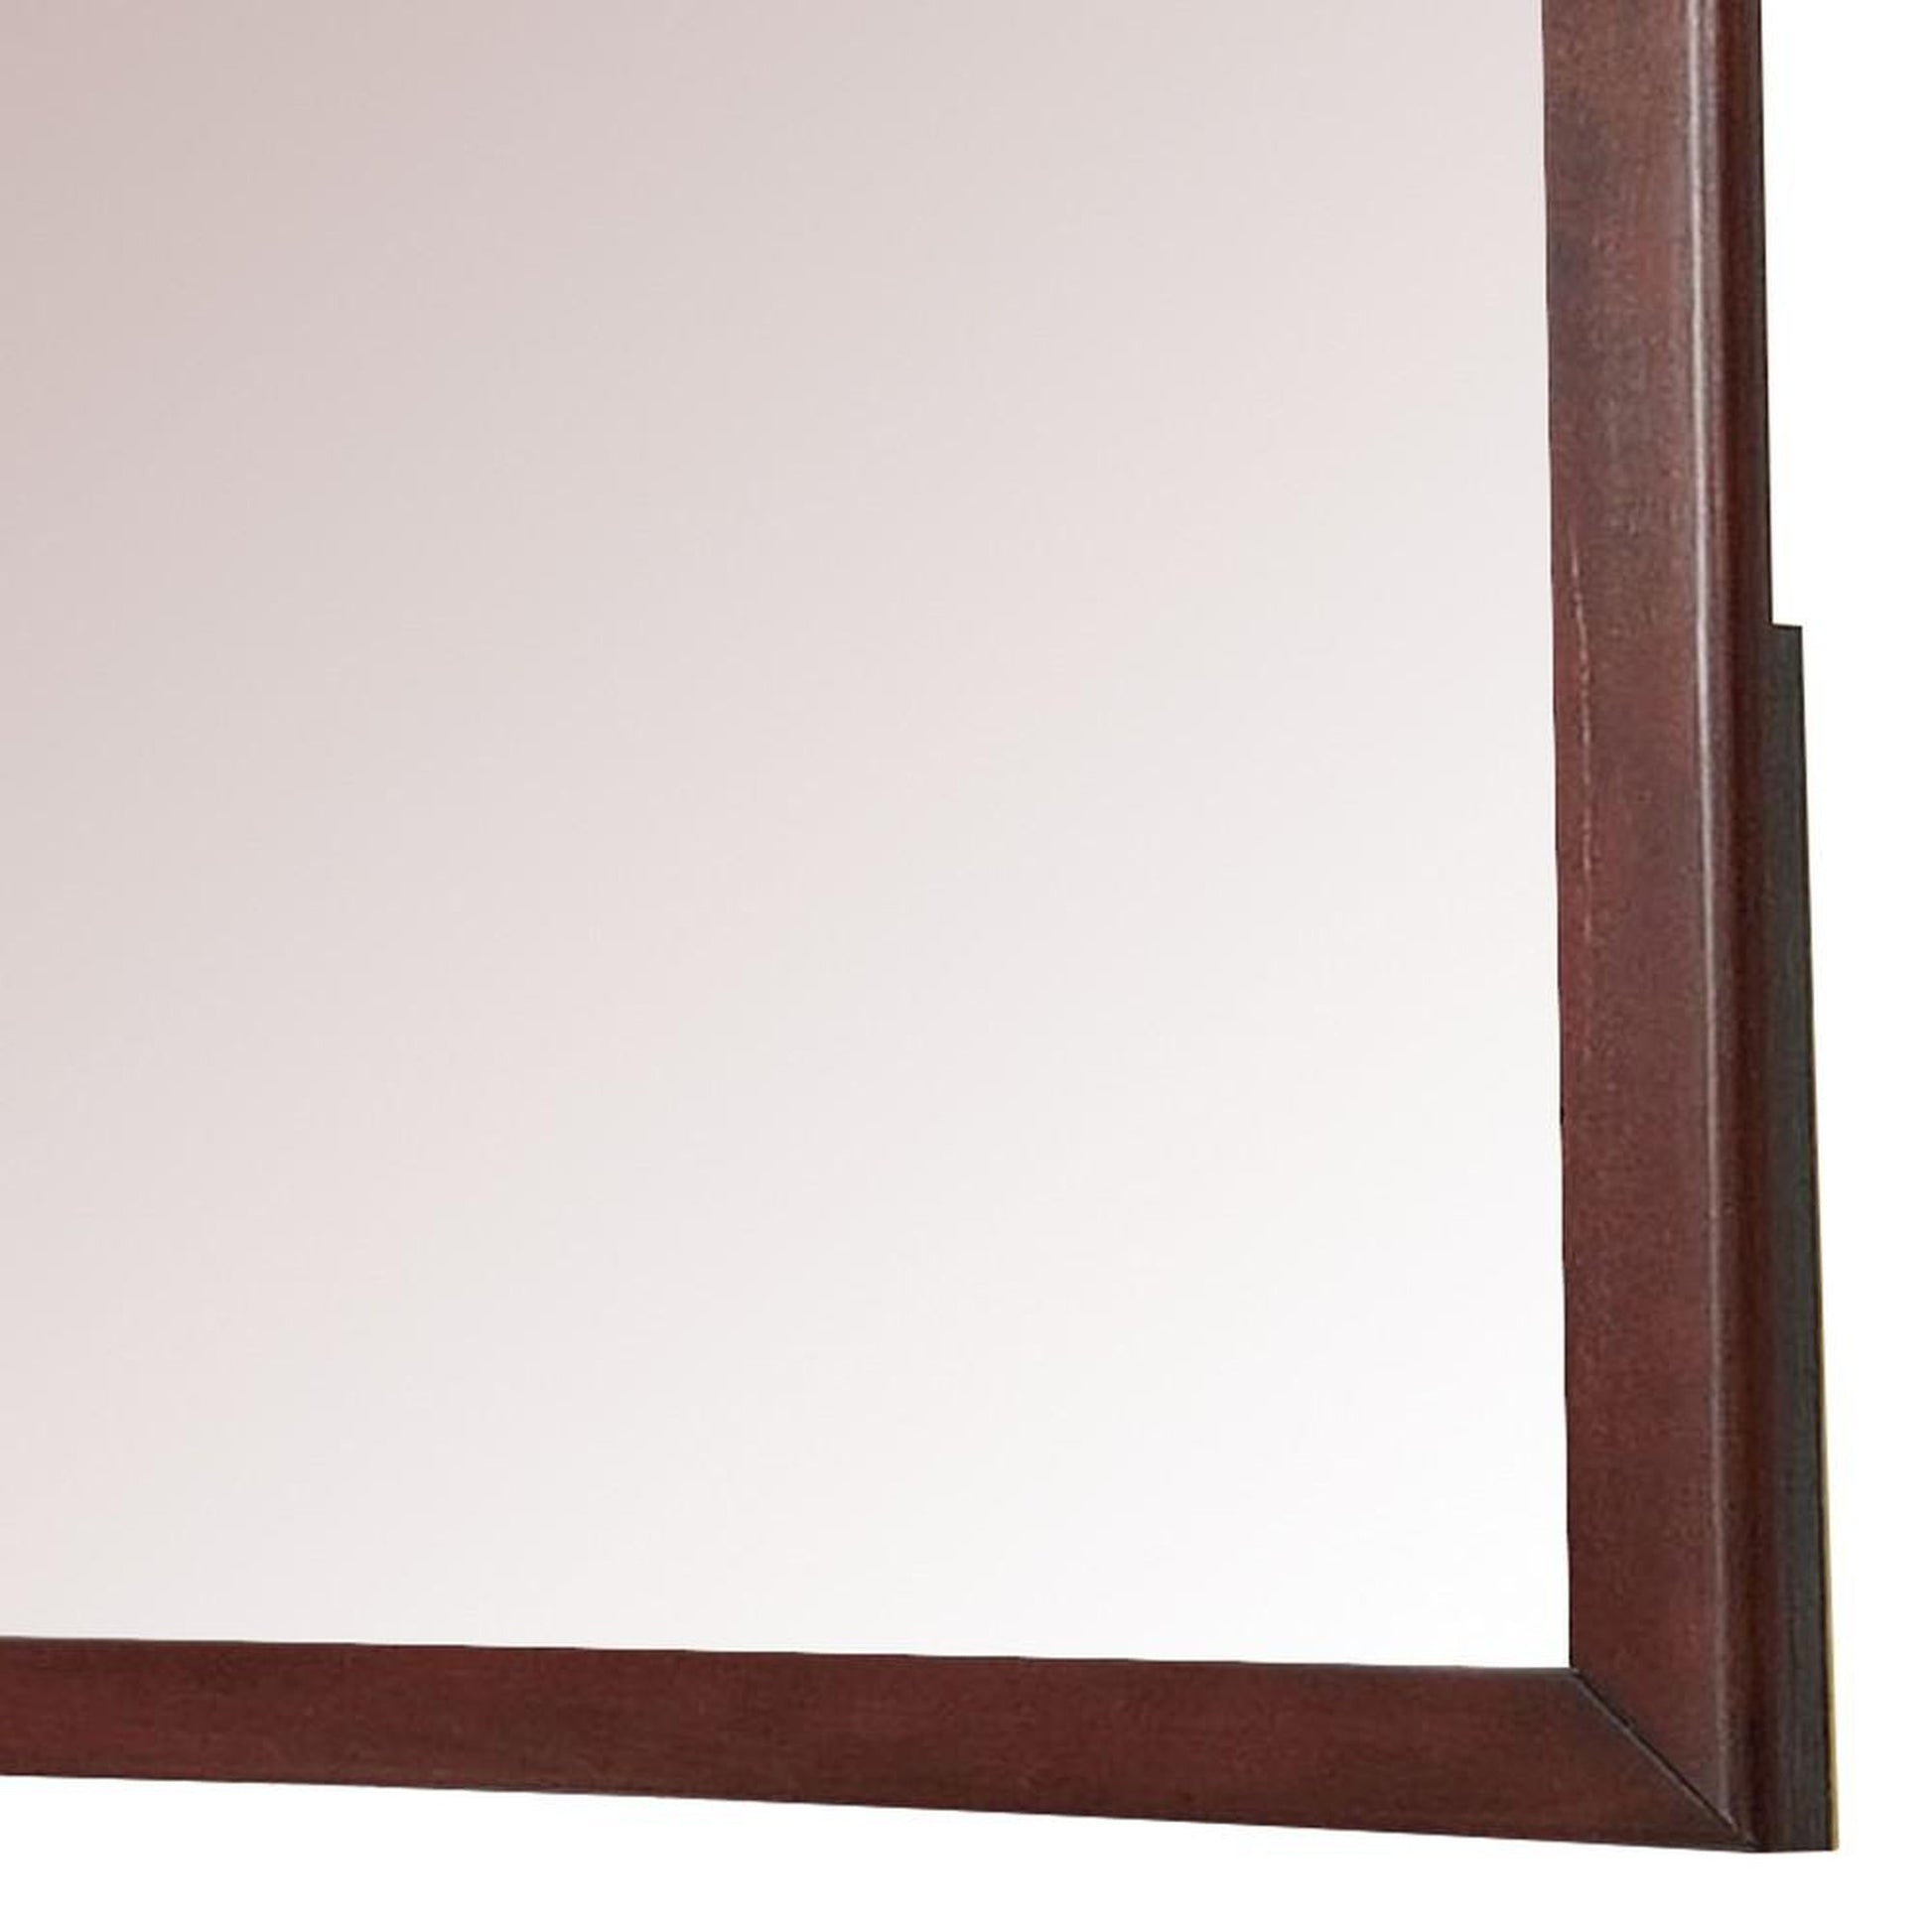 Benzara 36" Rectangular Cherry Brown Wooden Framed Wall Mirror